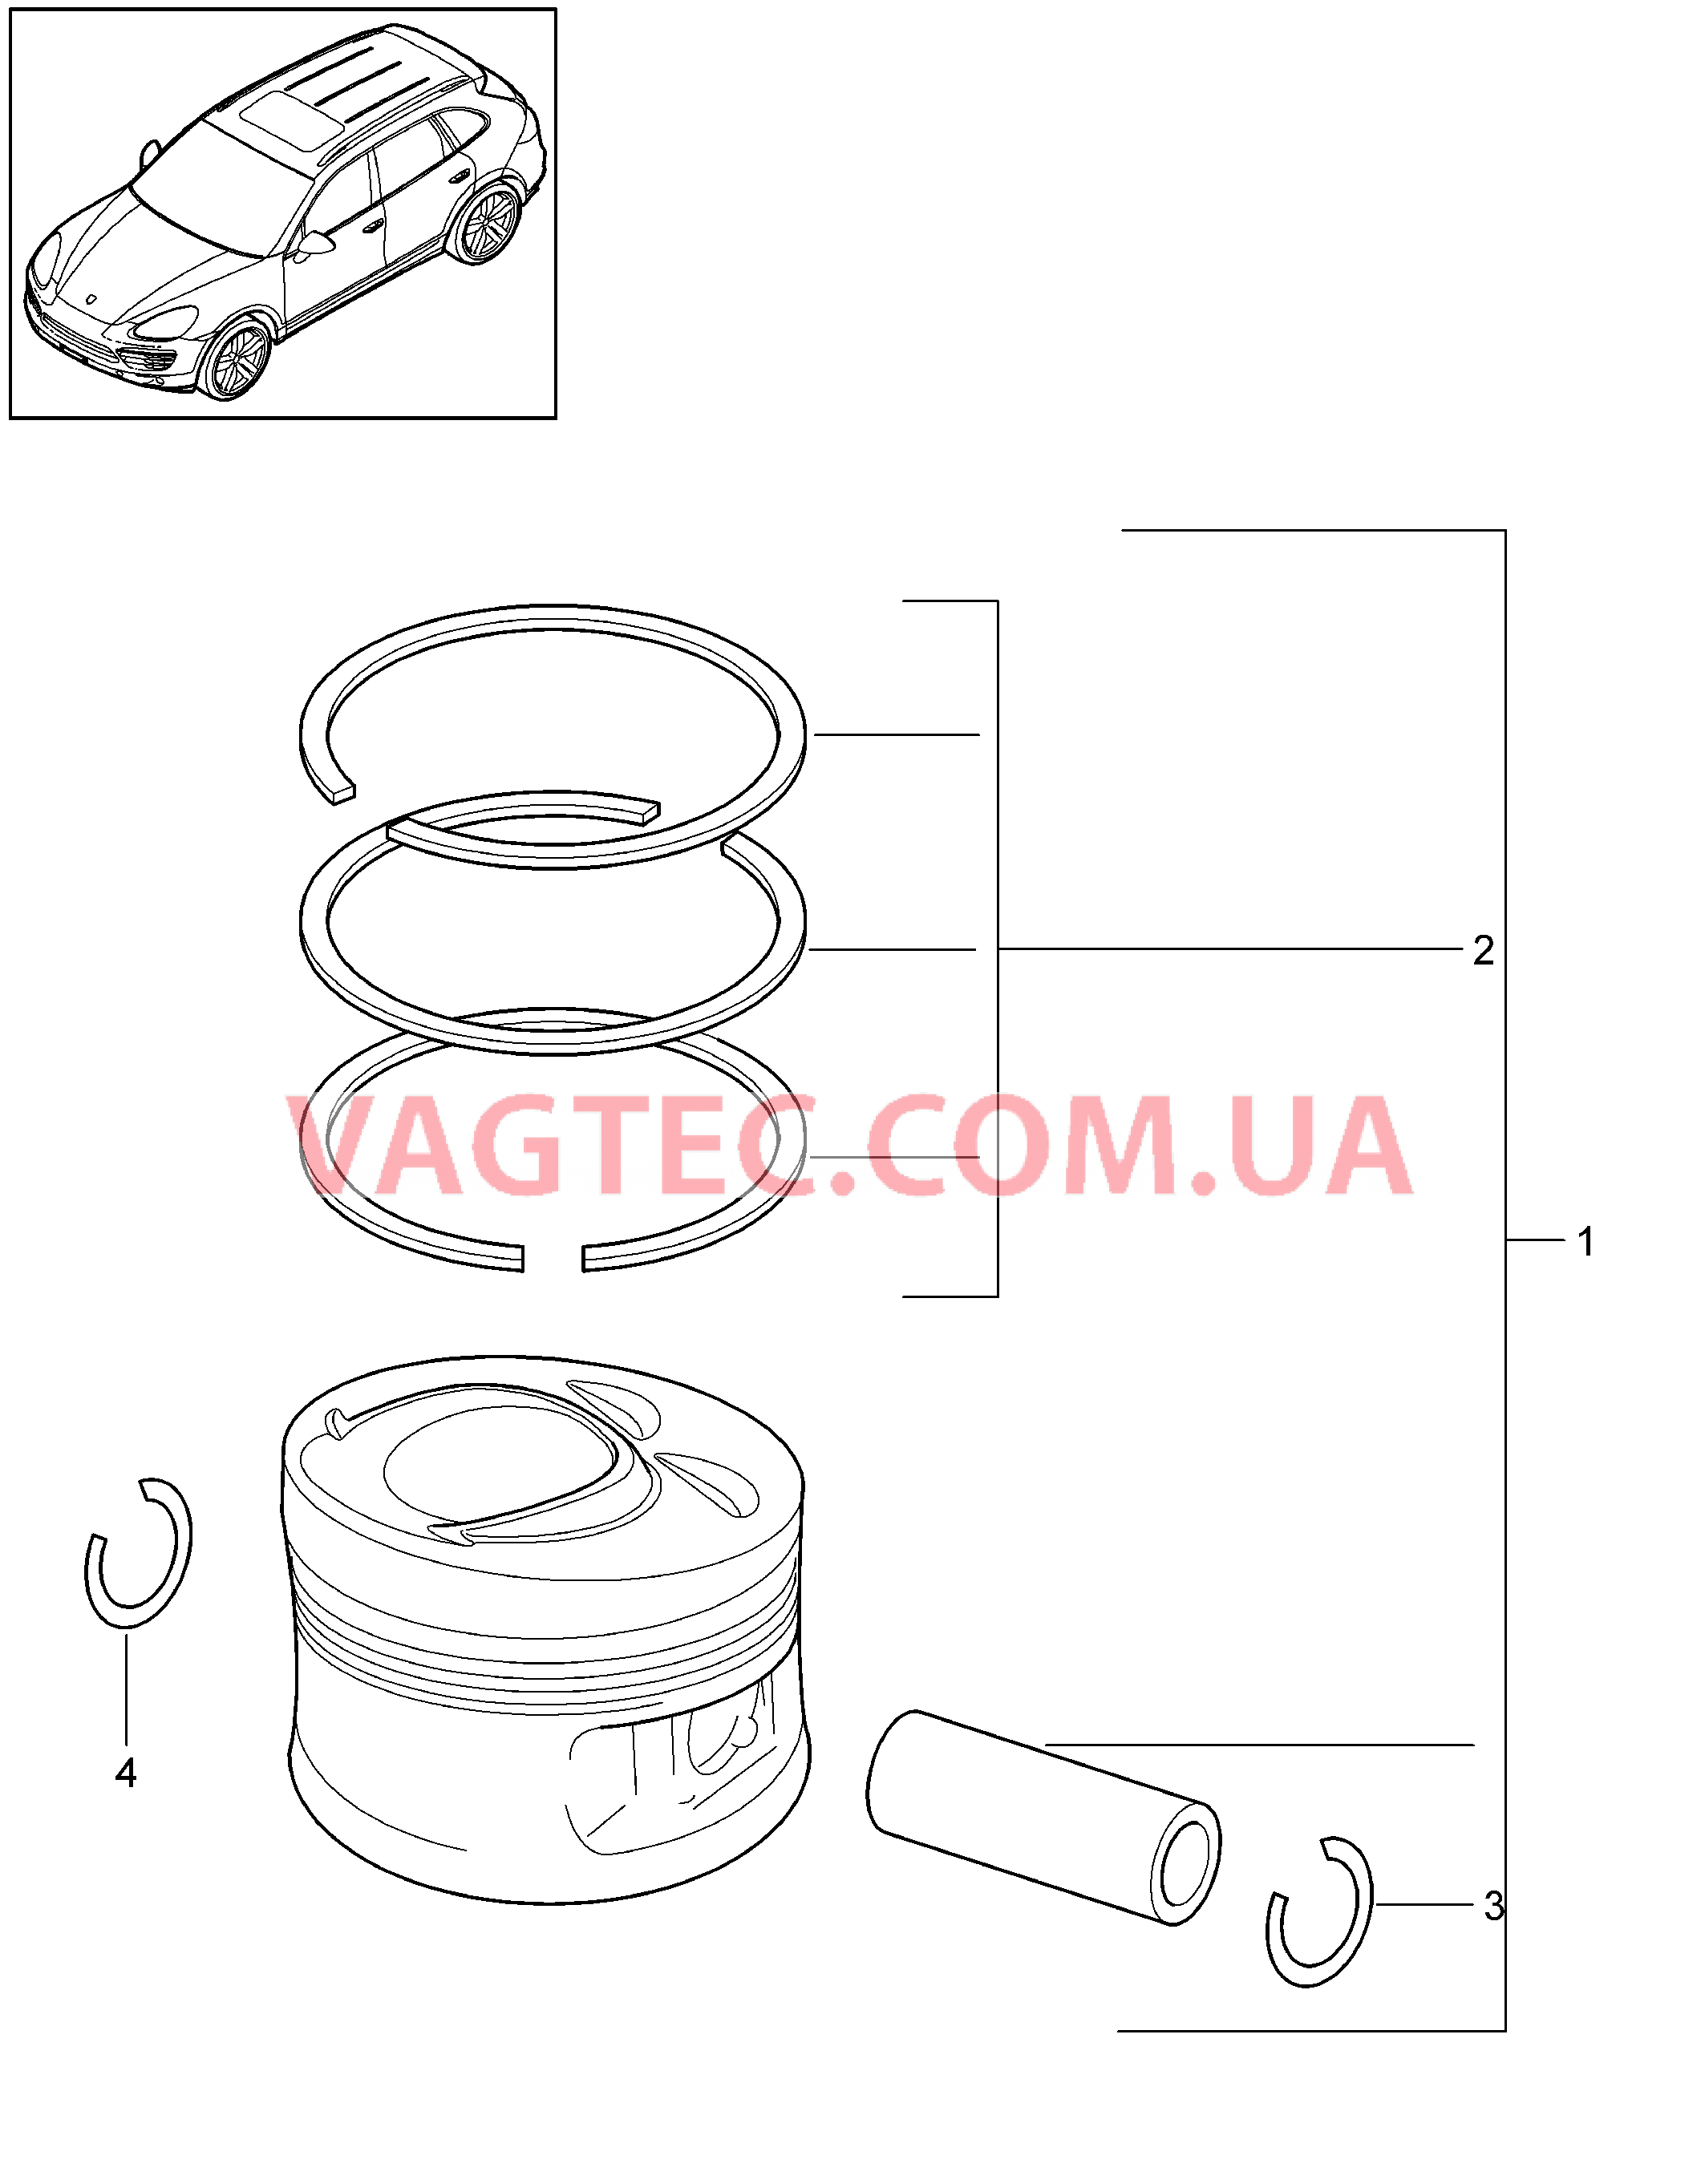 102-055 Поршень, Поршневые кольца
						
						MCE.YA, M55.02 для PORSCHE Cayenne 2011-2018USA